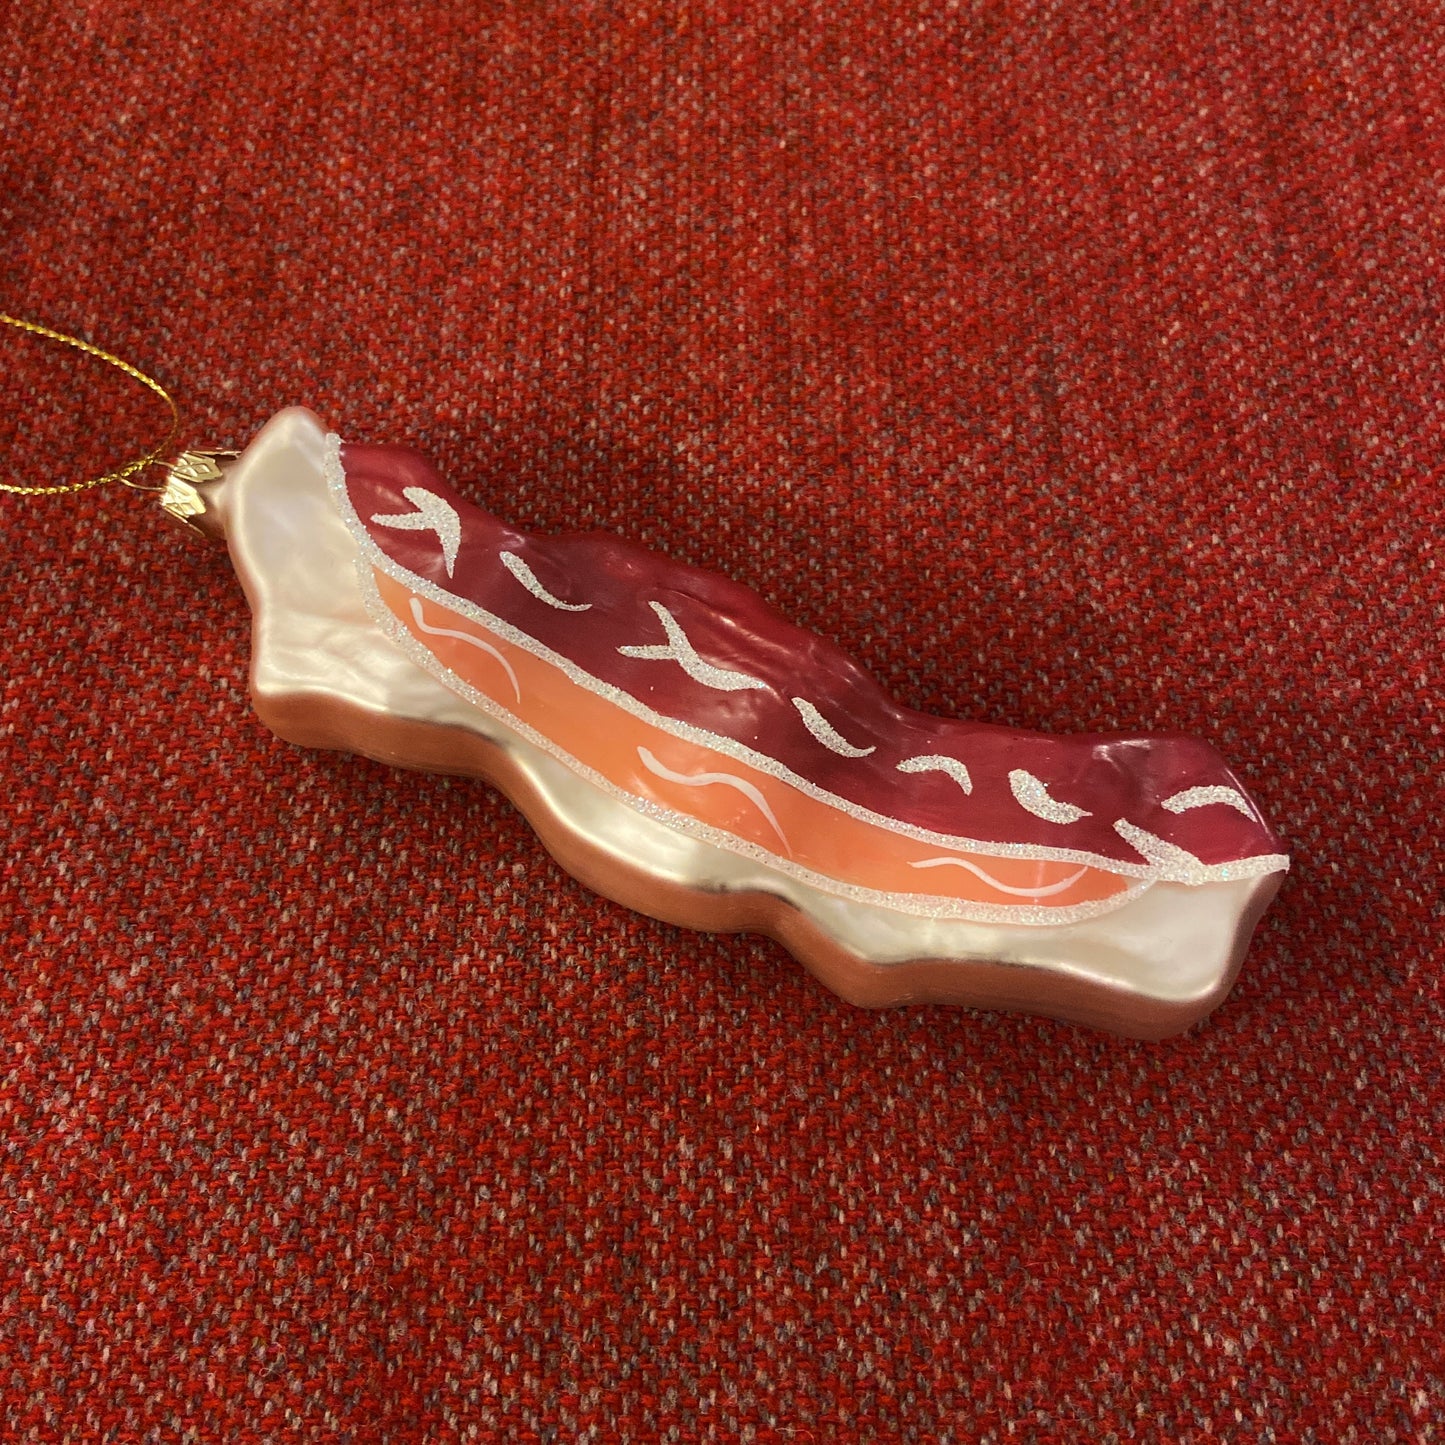 Bacon Strip Ornament